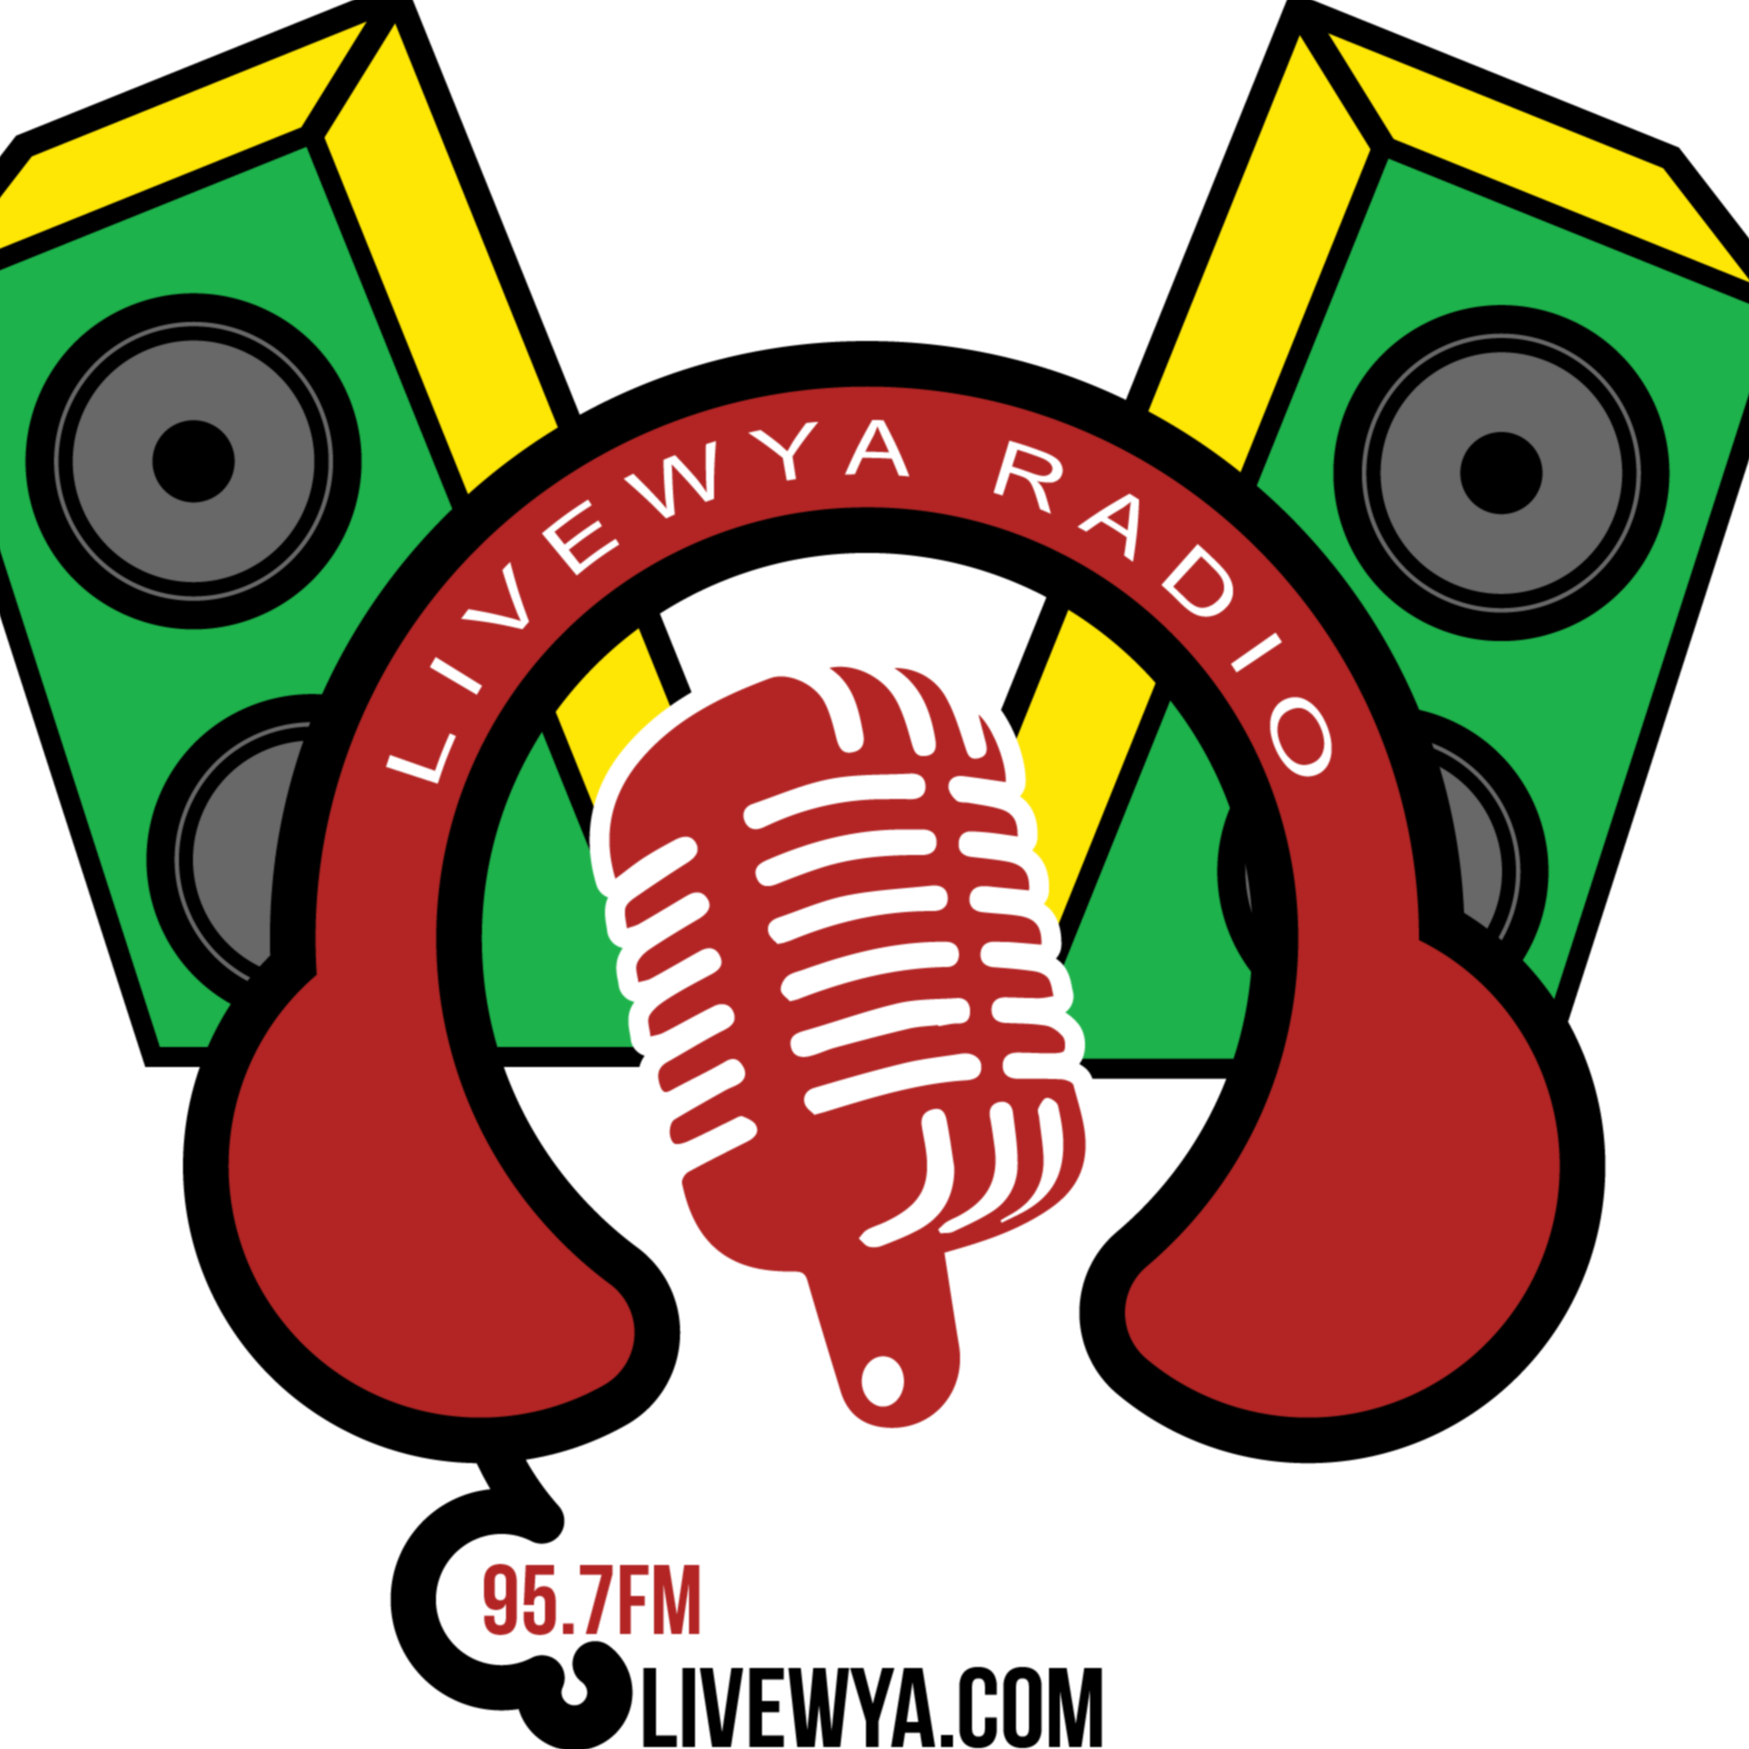 LiveWya Radio 95.7FM